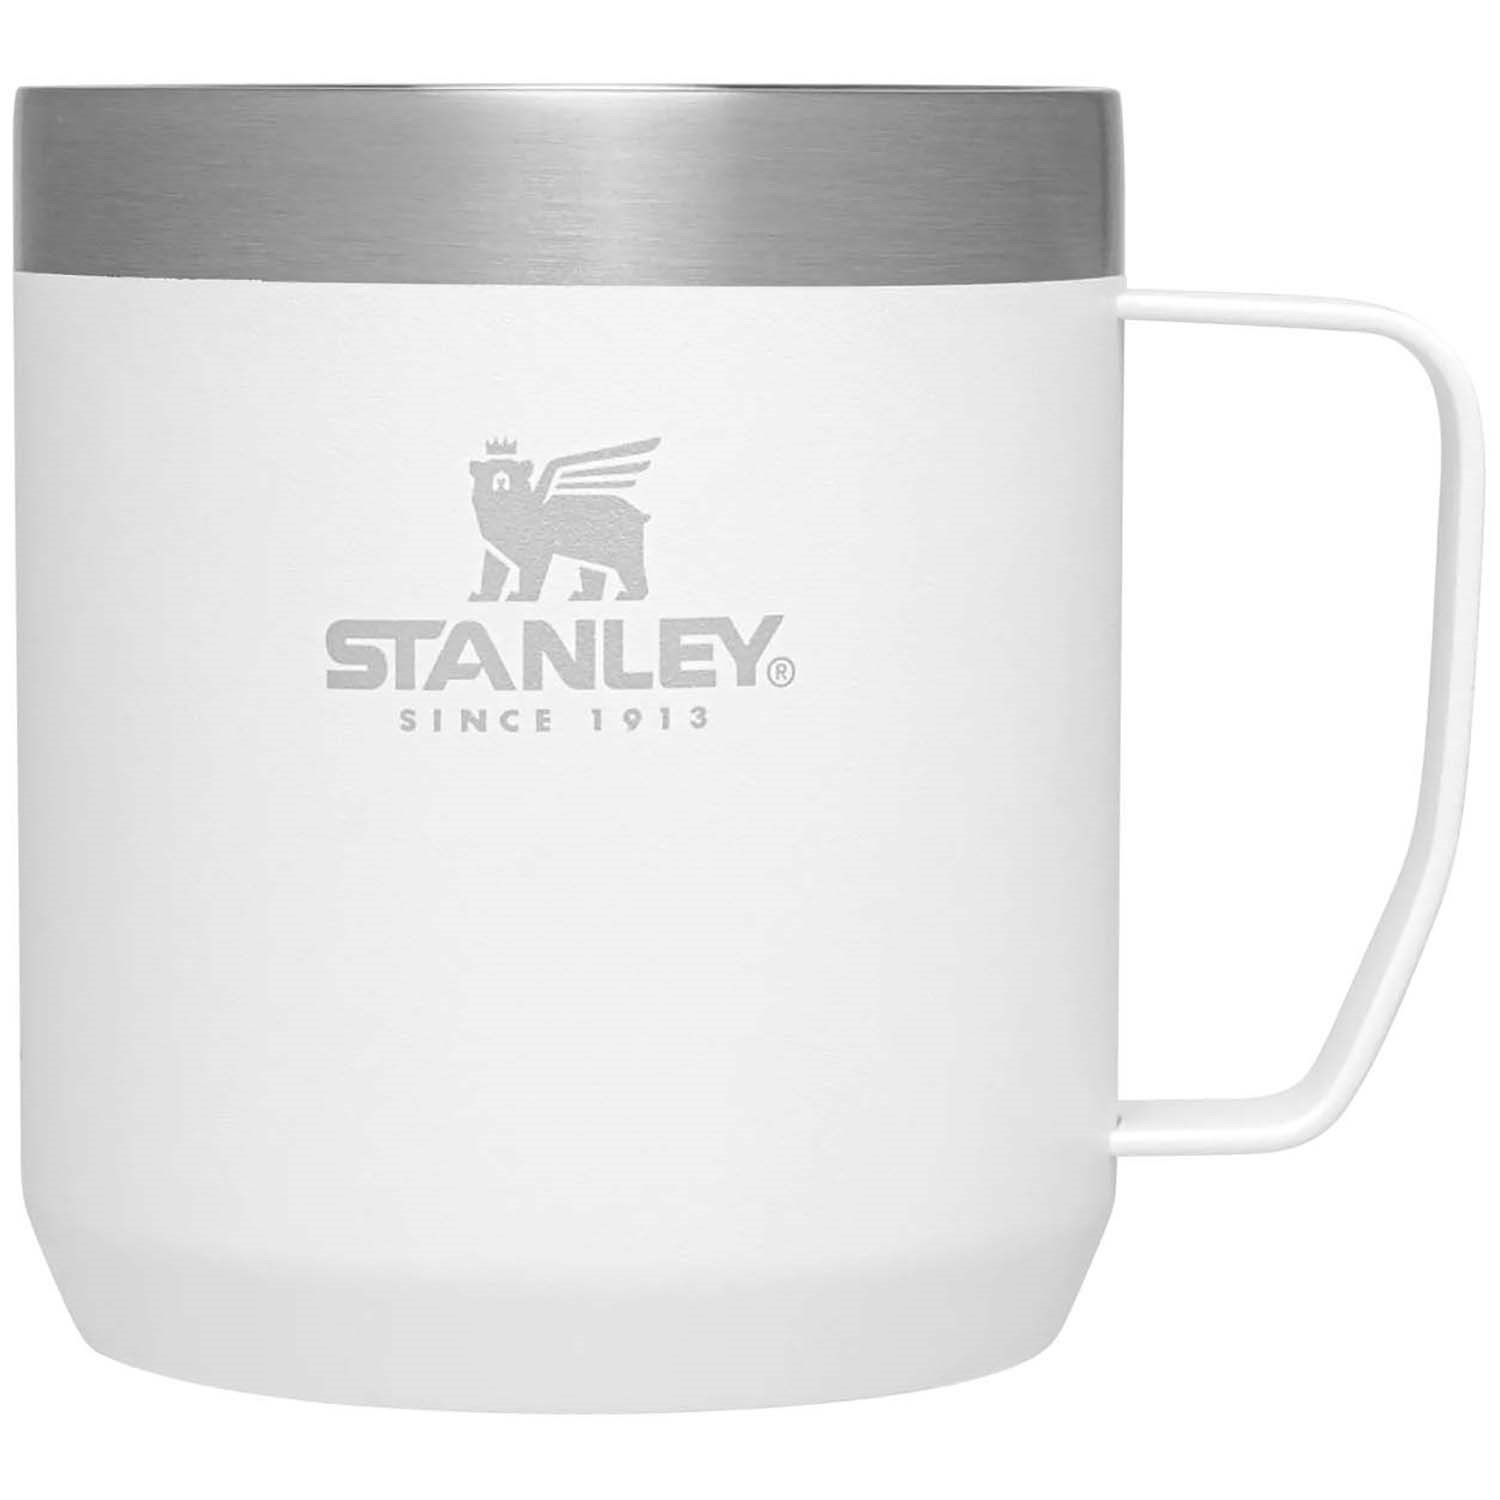 Stanley The Legendary Camp Mug, green